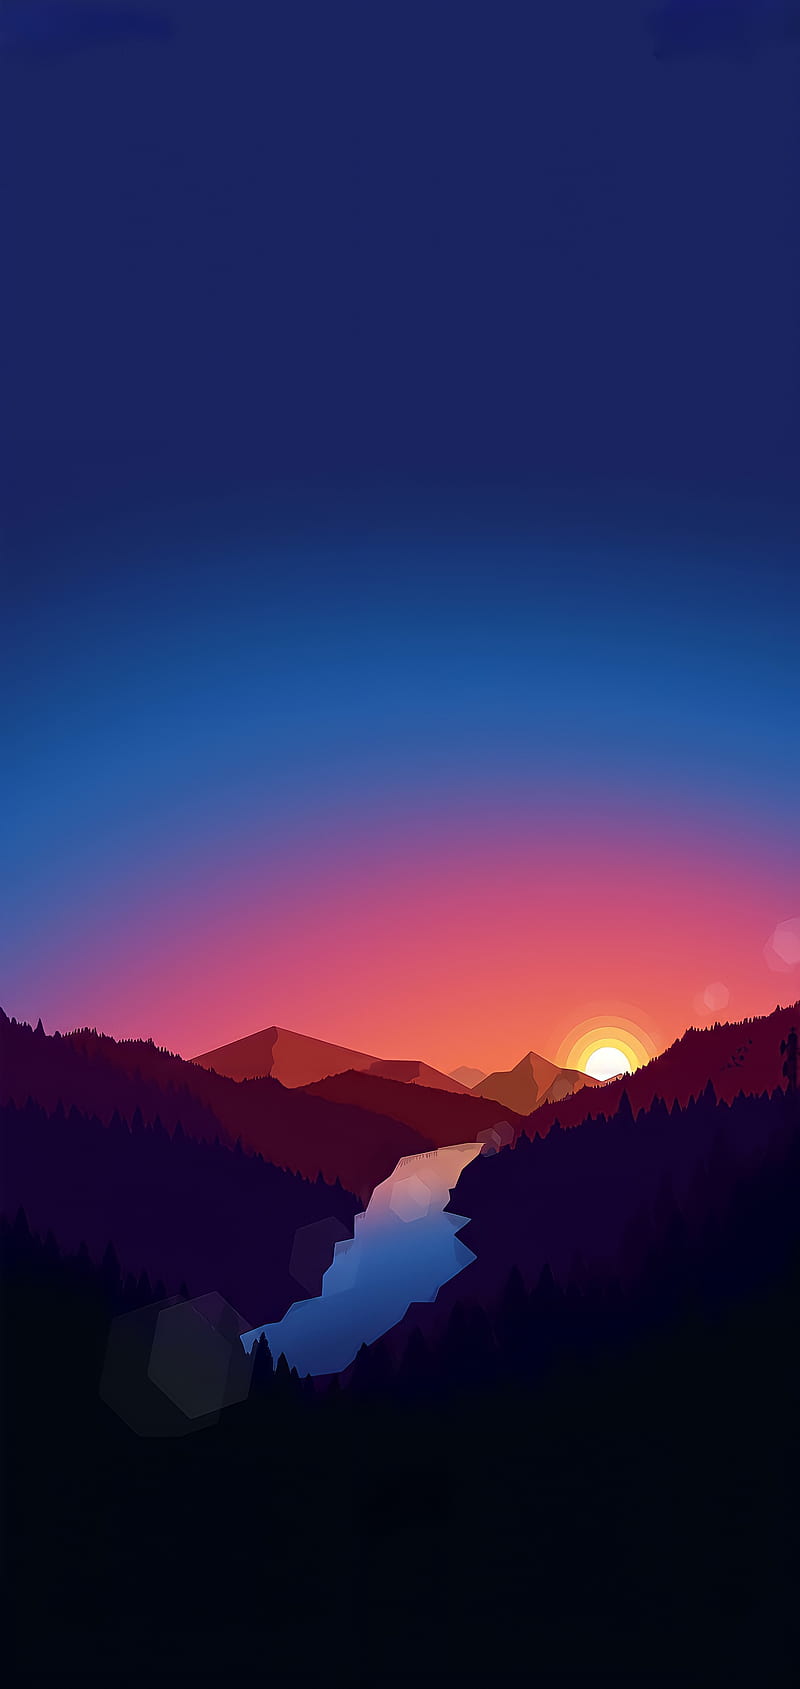 sunset over mountains wallpaper